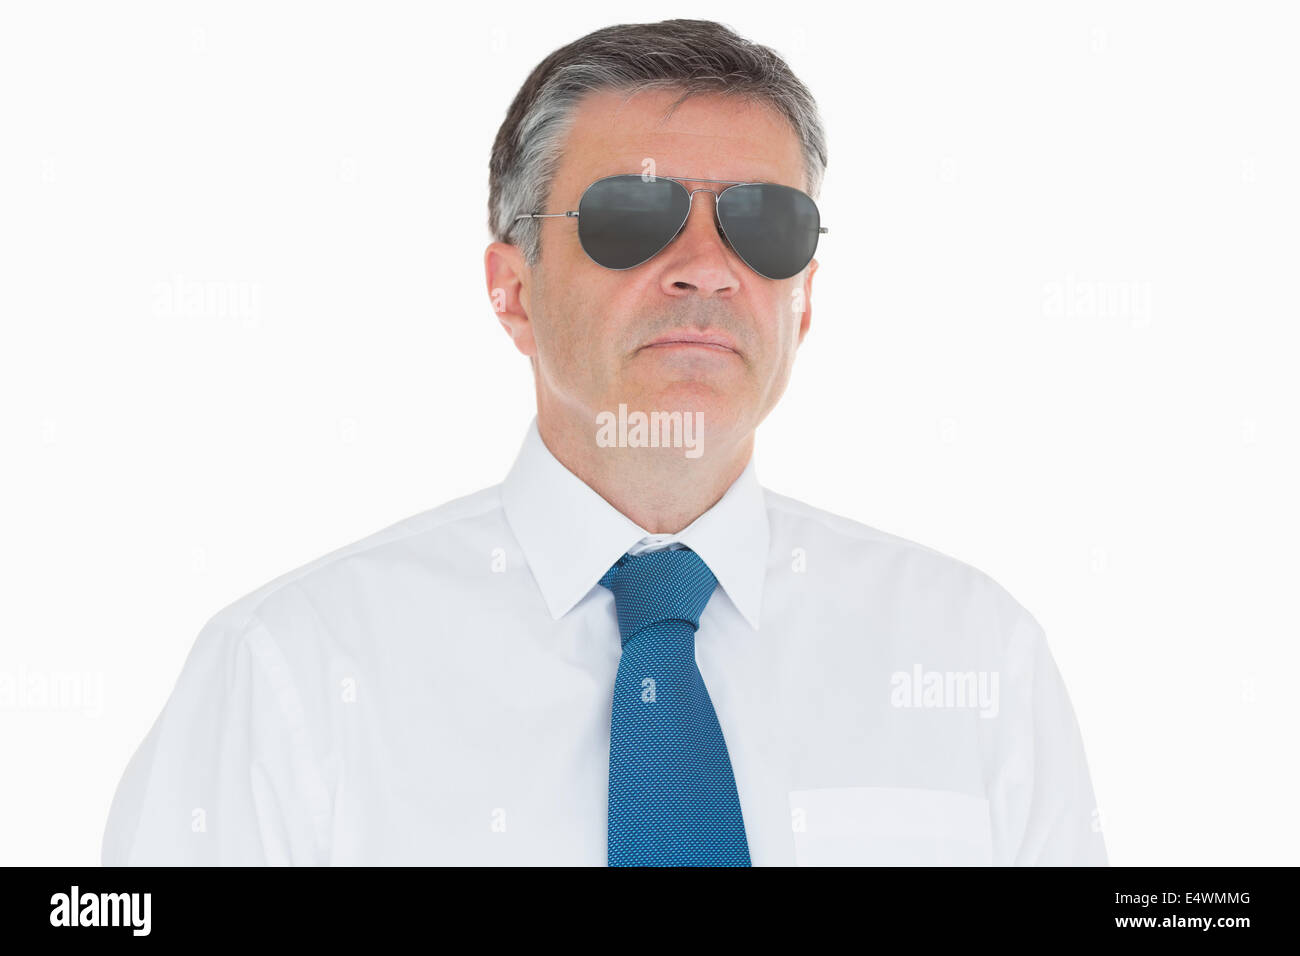 Stern businessman in sunglasses Stock Photo - Alamy